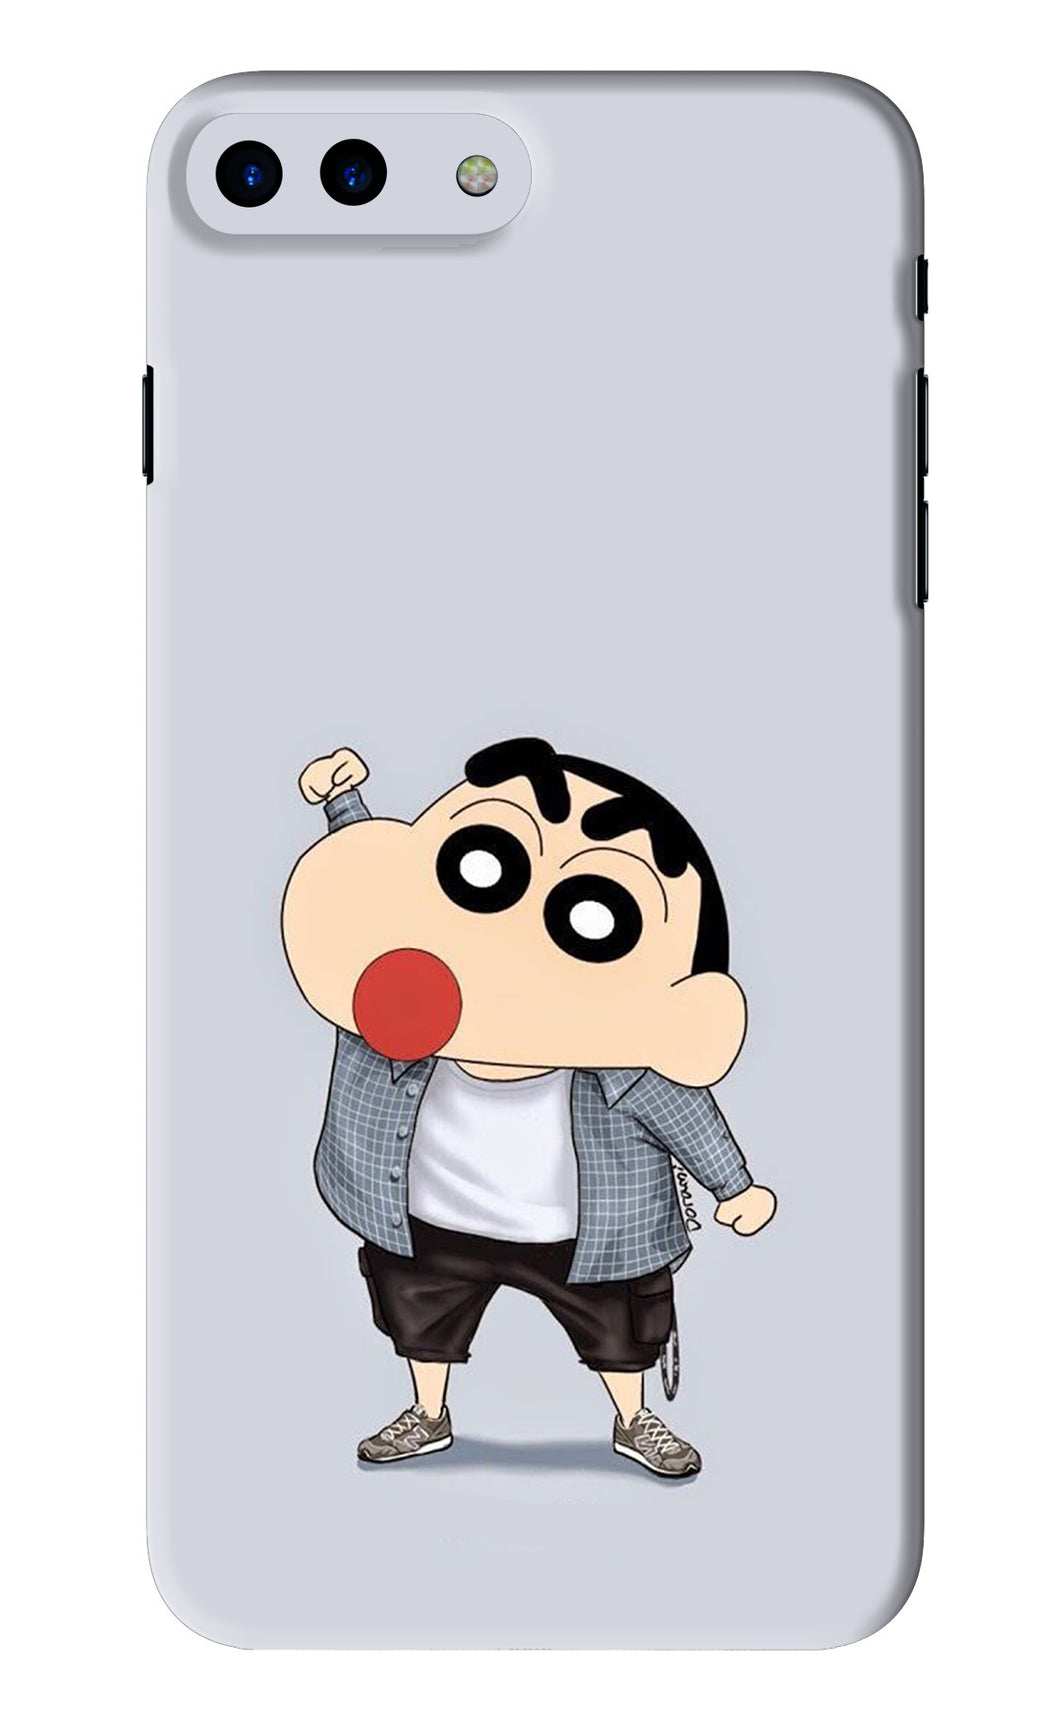 Shinchan iPhone 7 Plus Back Skin Wrap